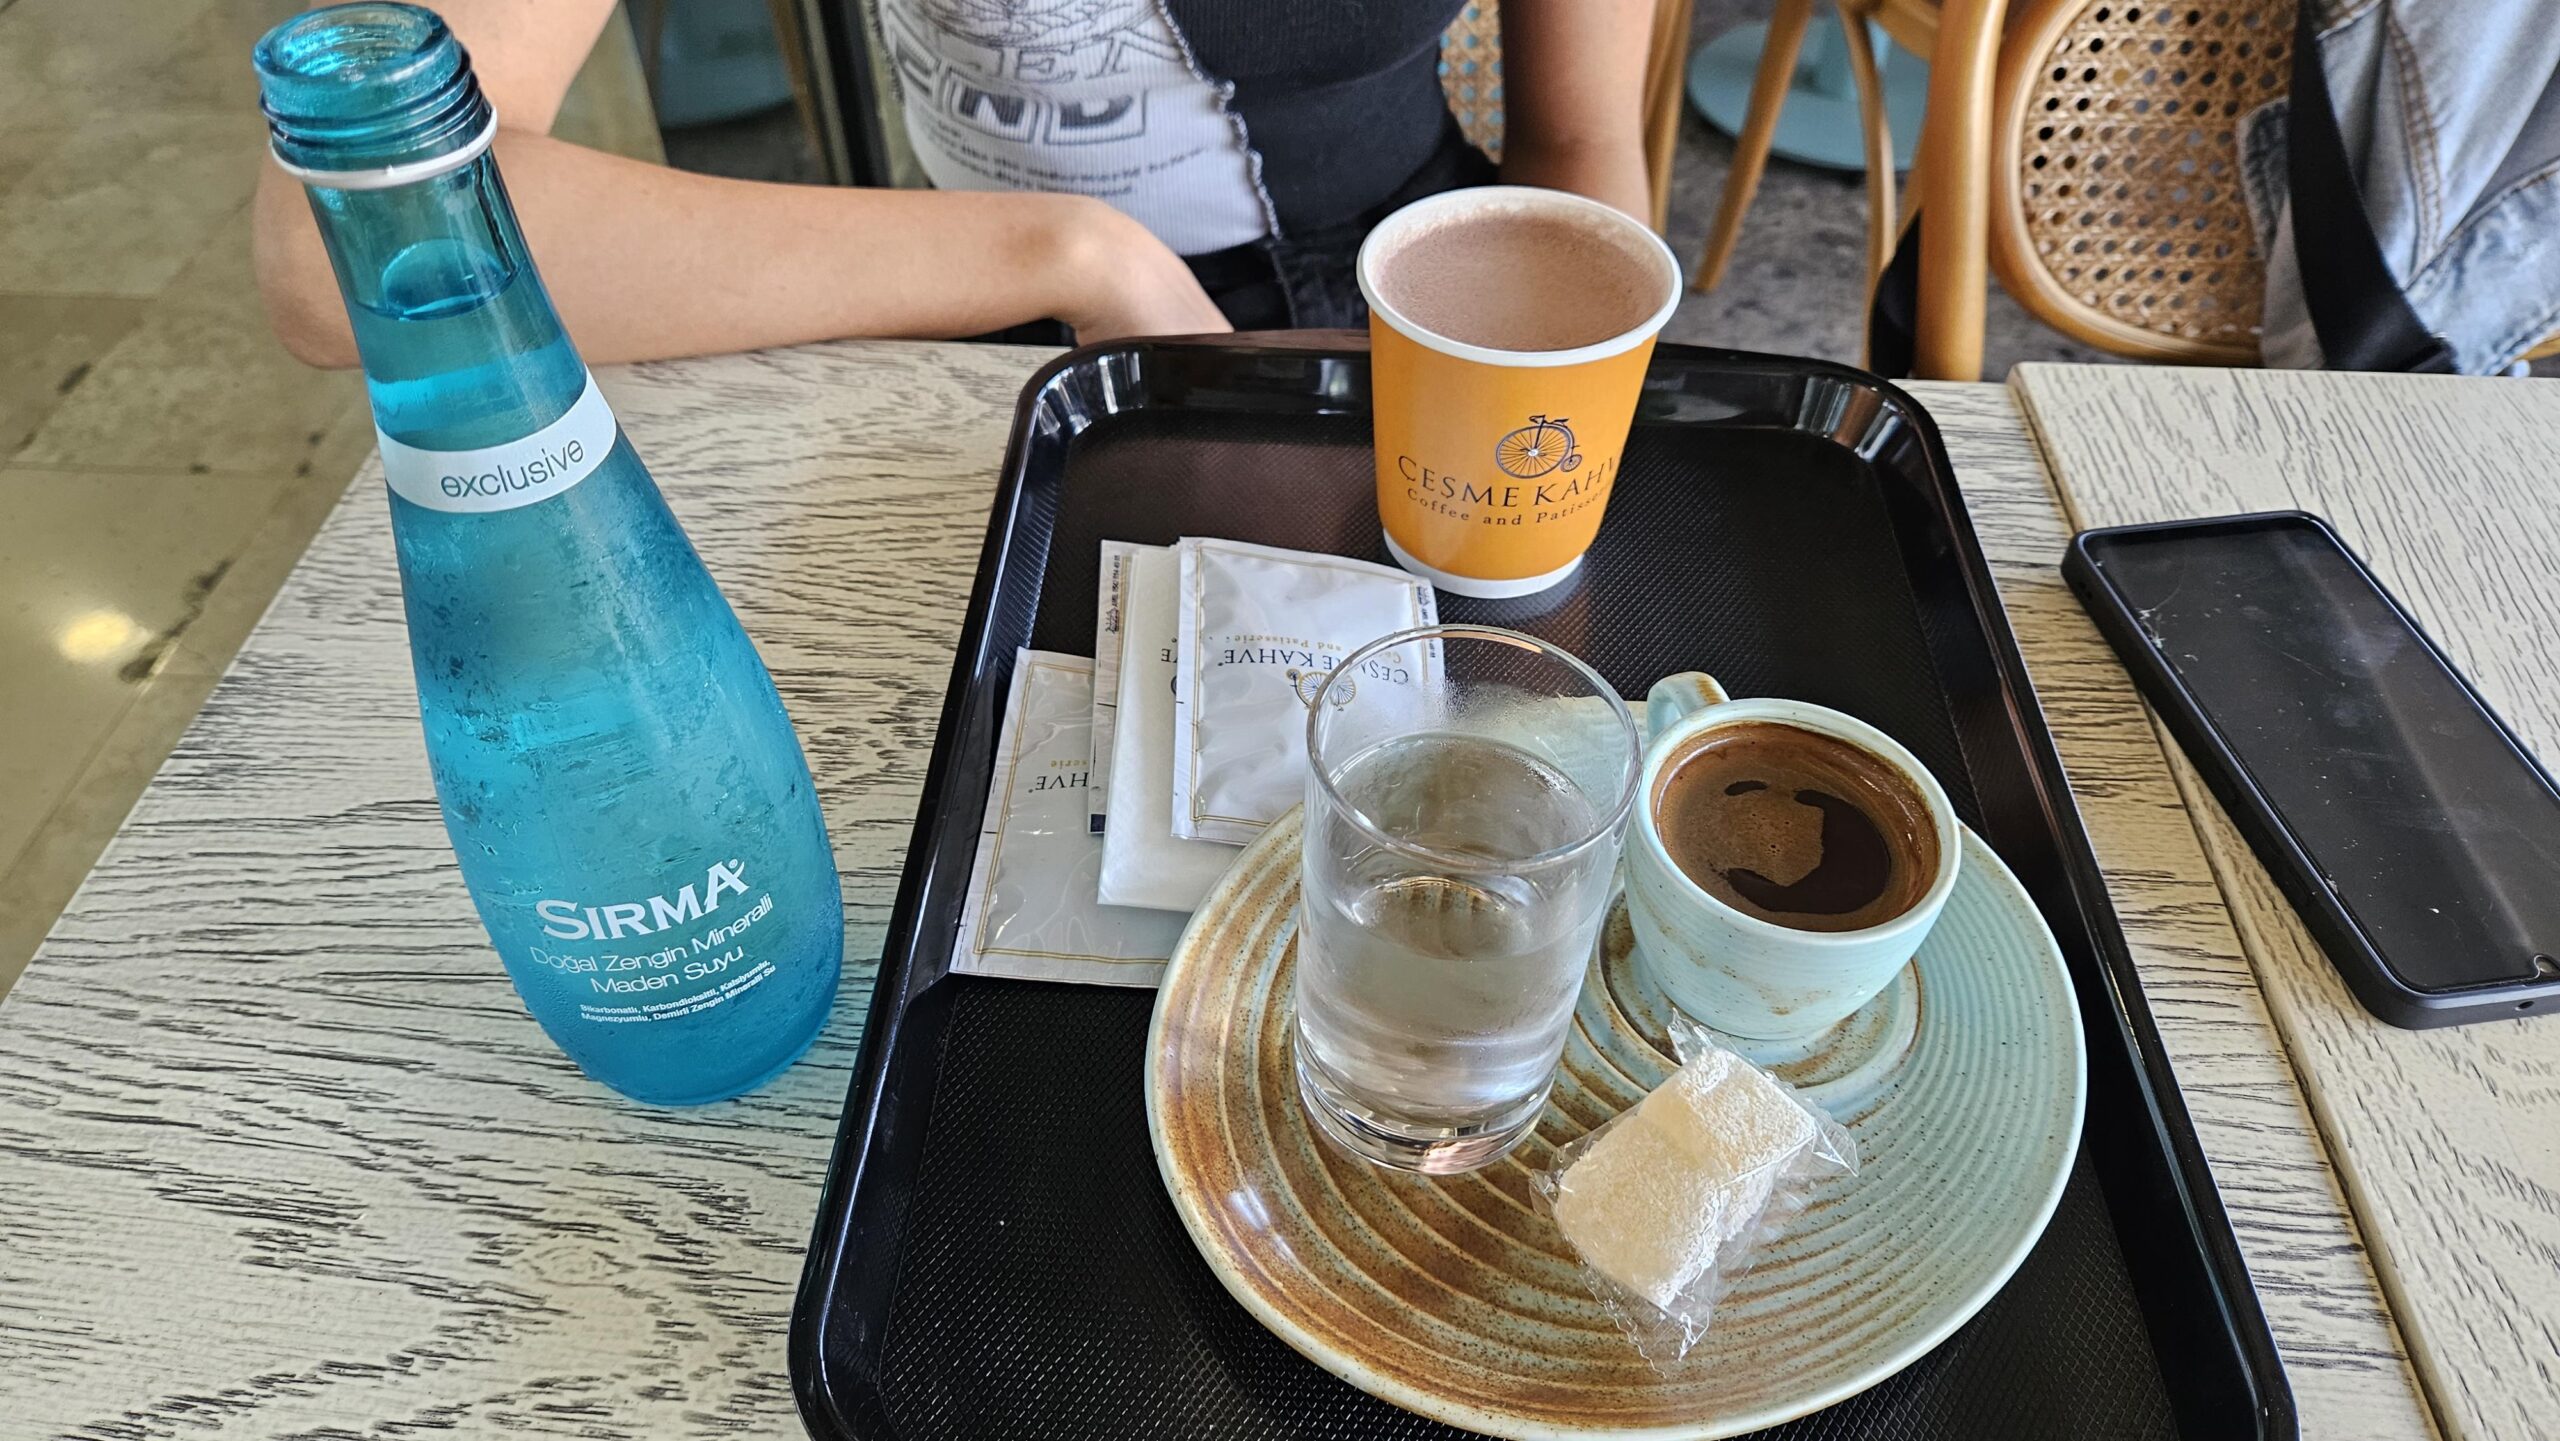 Çeşme Kahve Coffe And Patisserie Beylikdüzü Migros MekanYorumlari.com